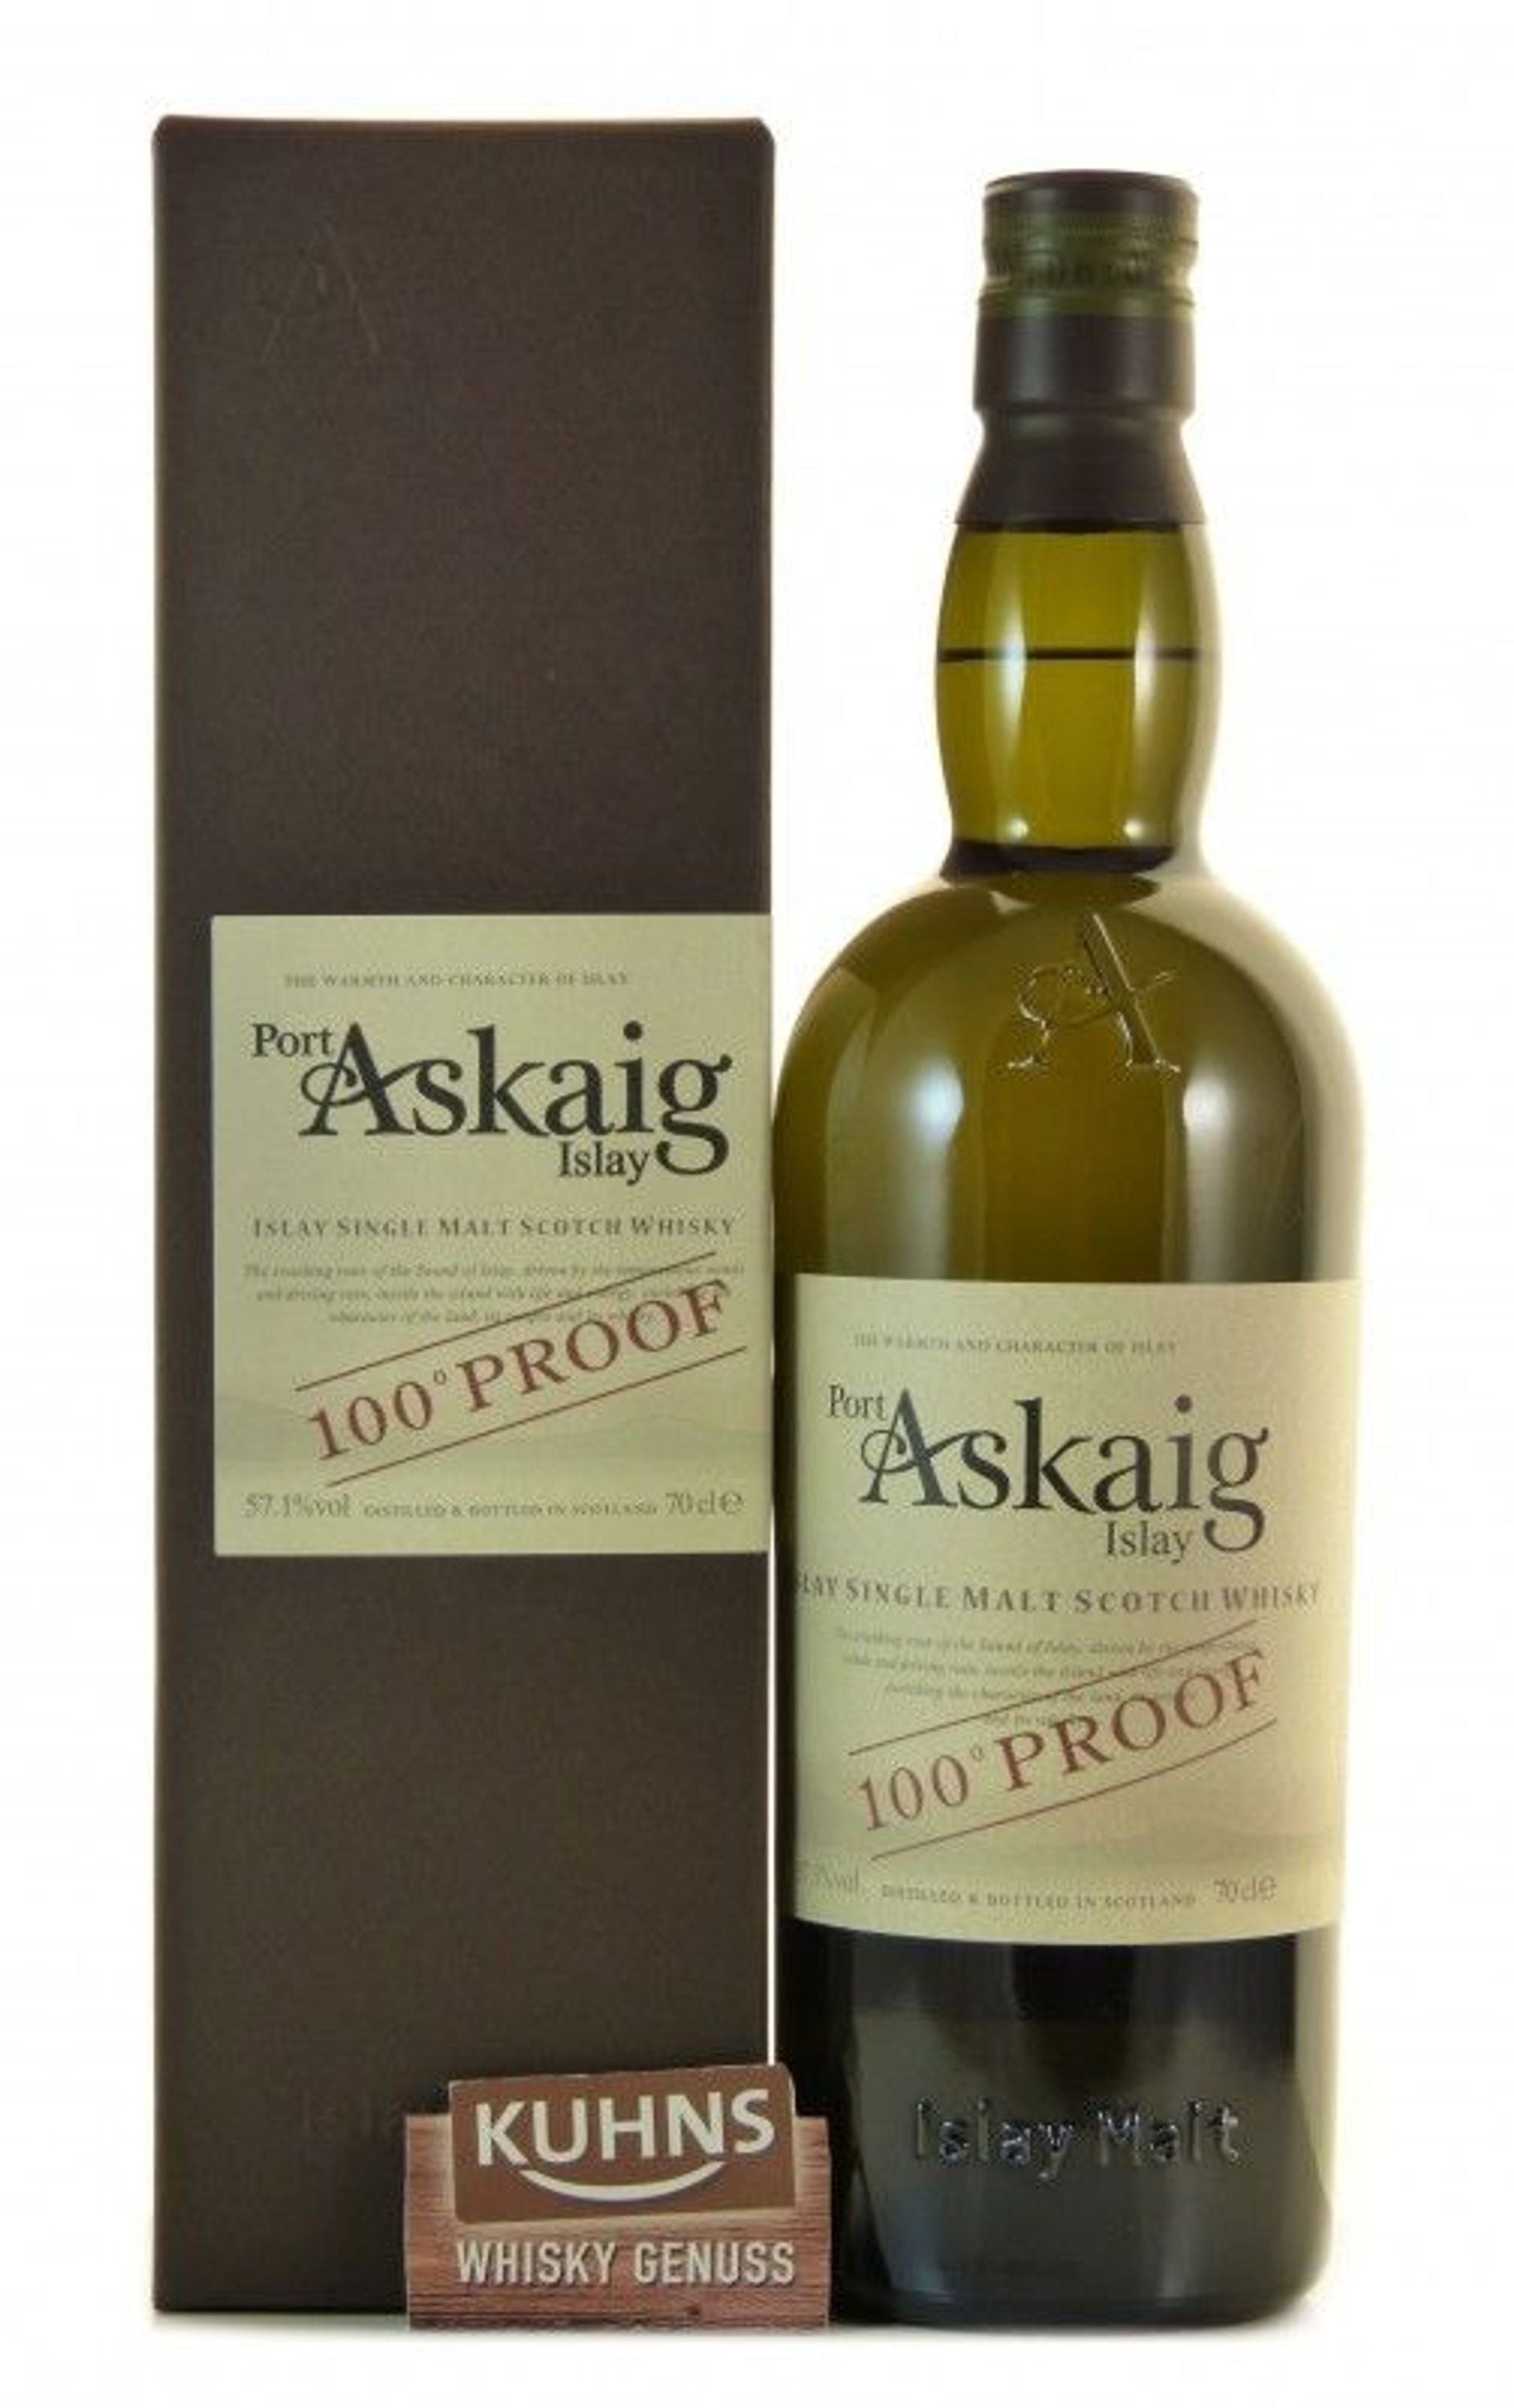 Port Askaig 100 Proof Islay Single Malt Scotch Whiskey 0.7l, alc. 57.1% by volume